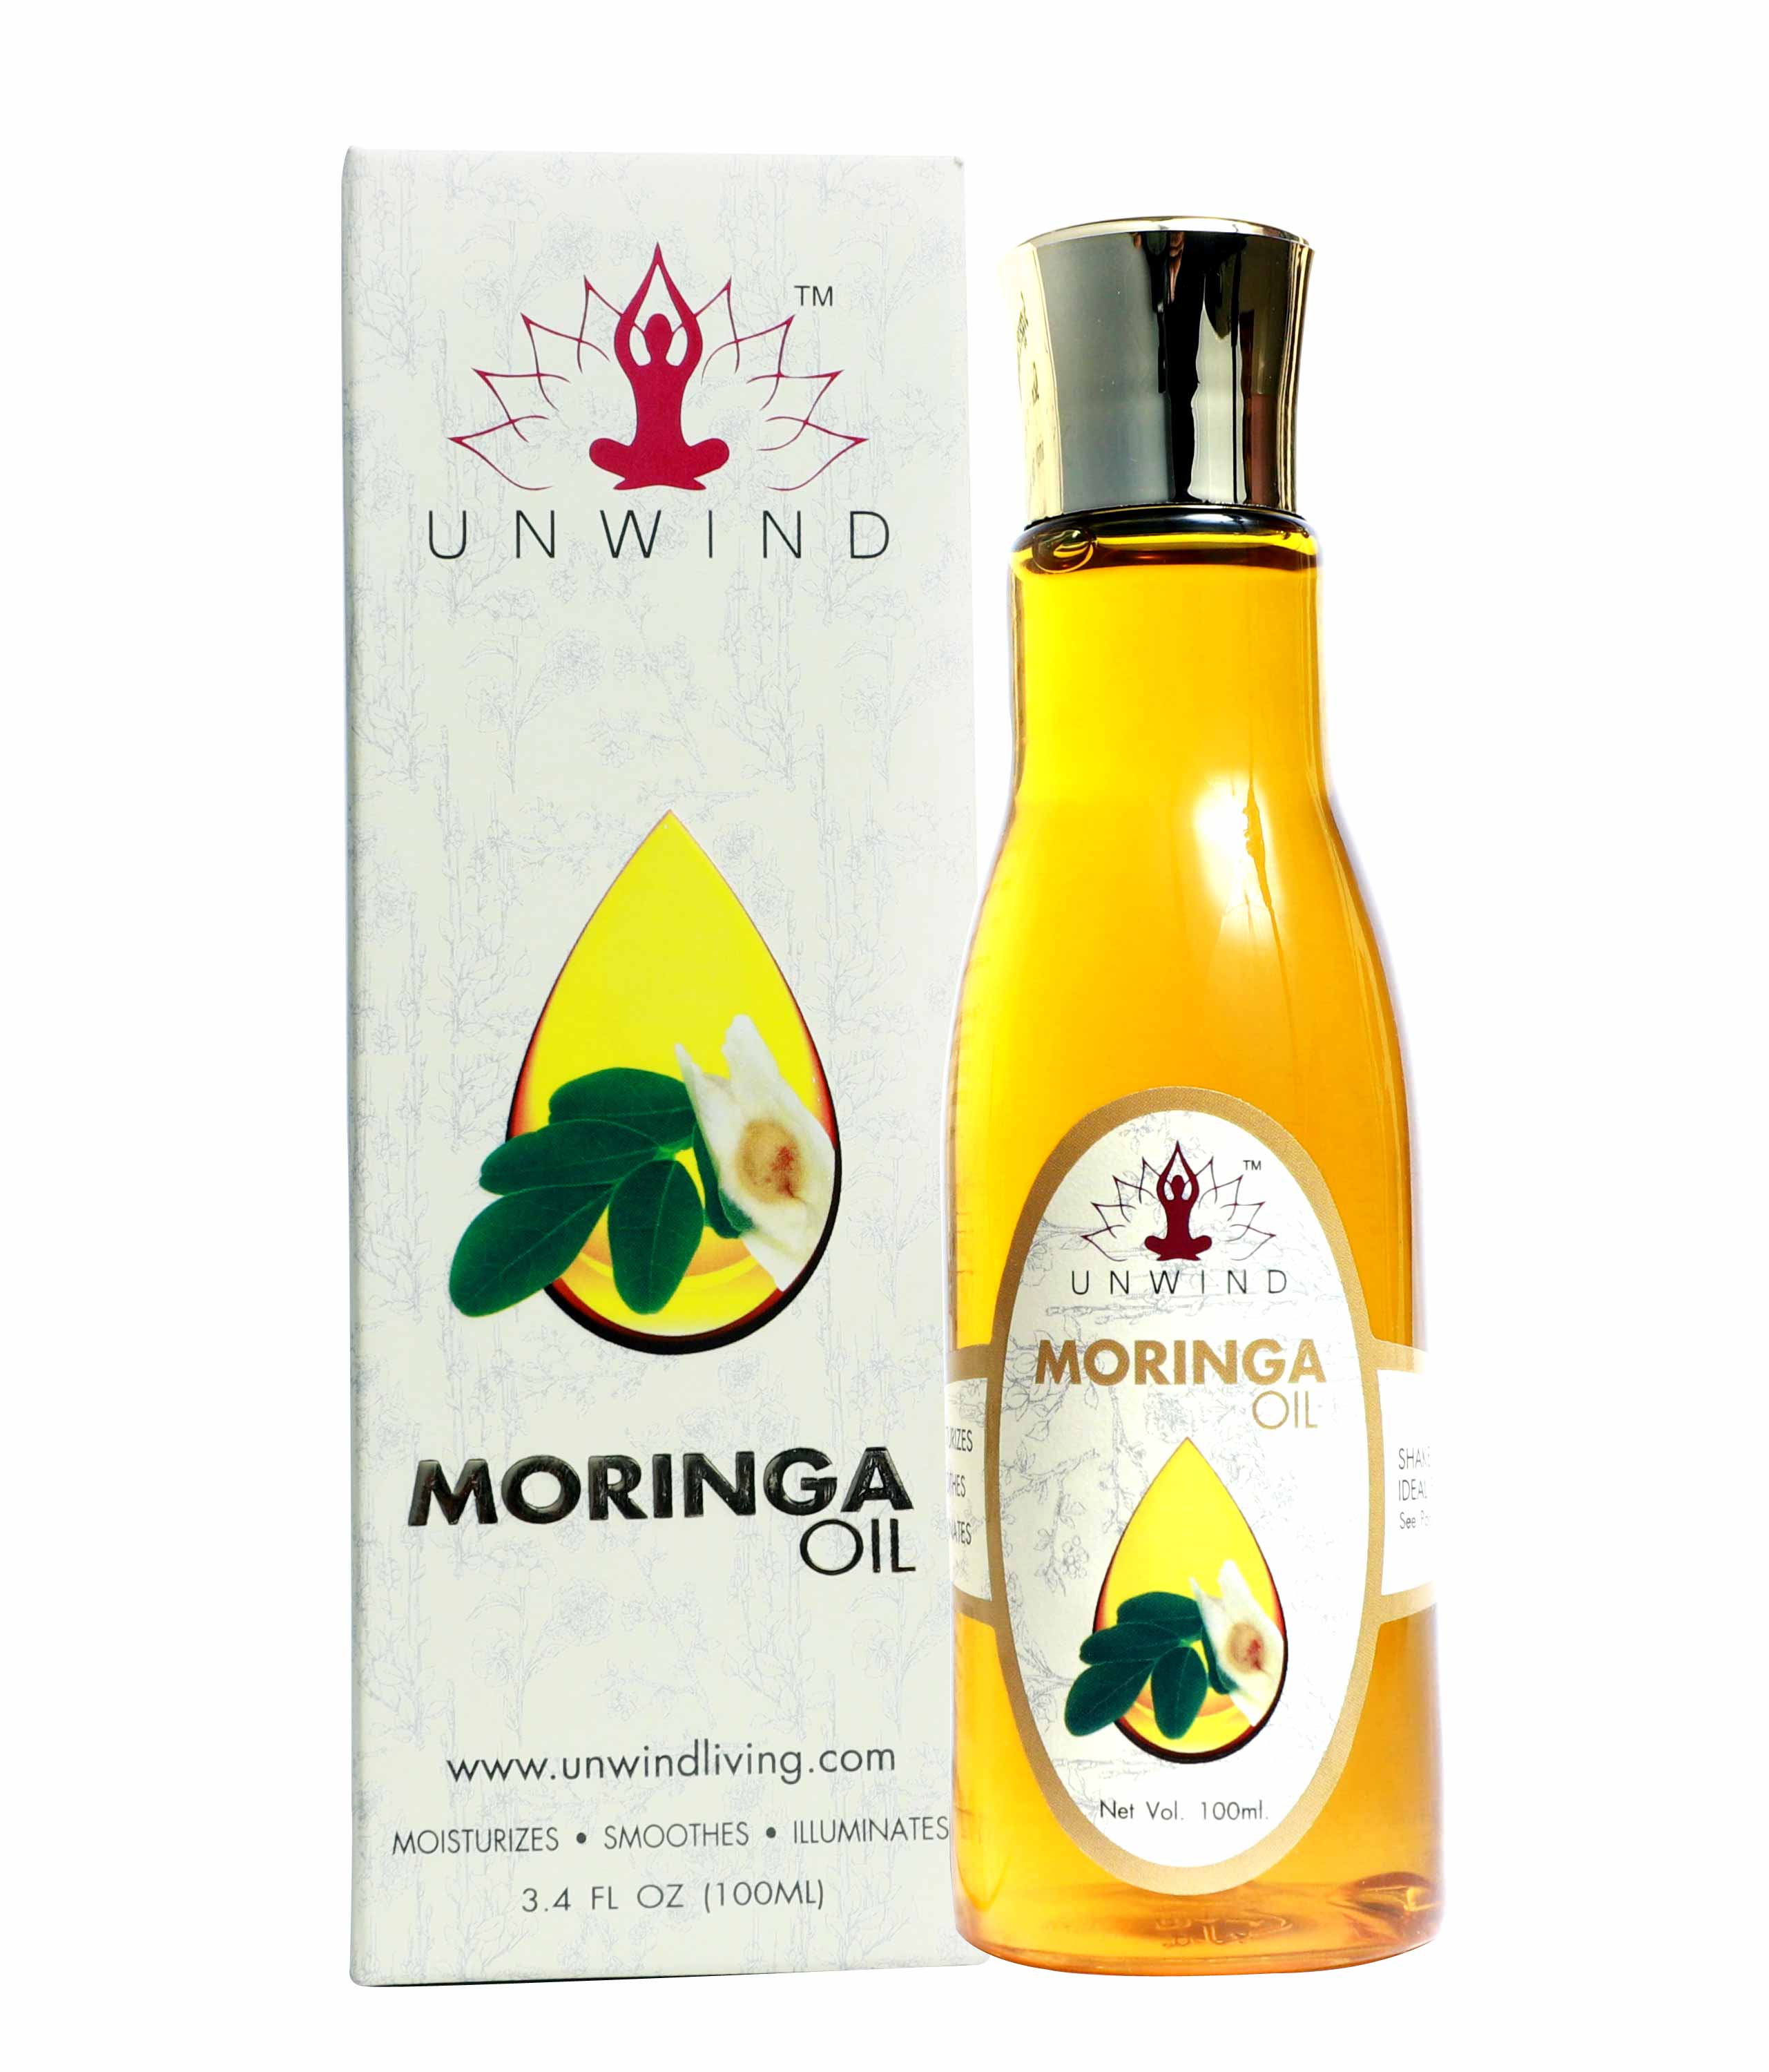 Unwind Moringa Oil